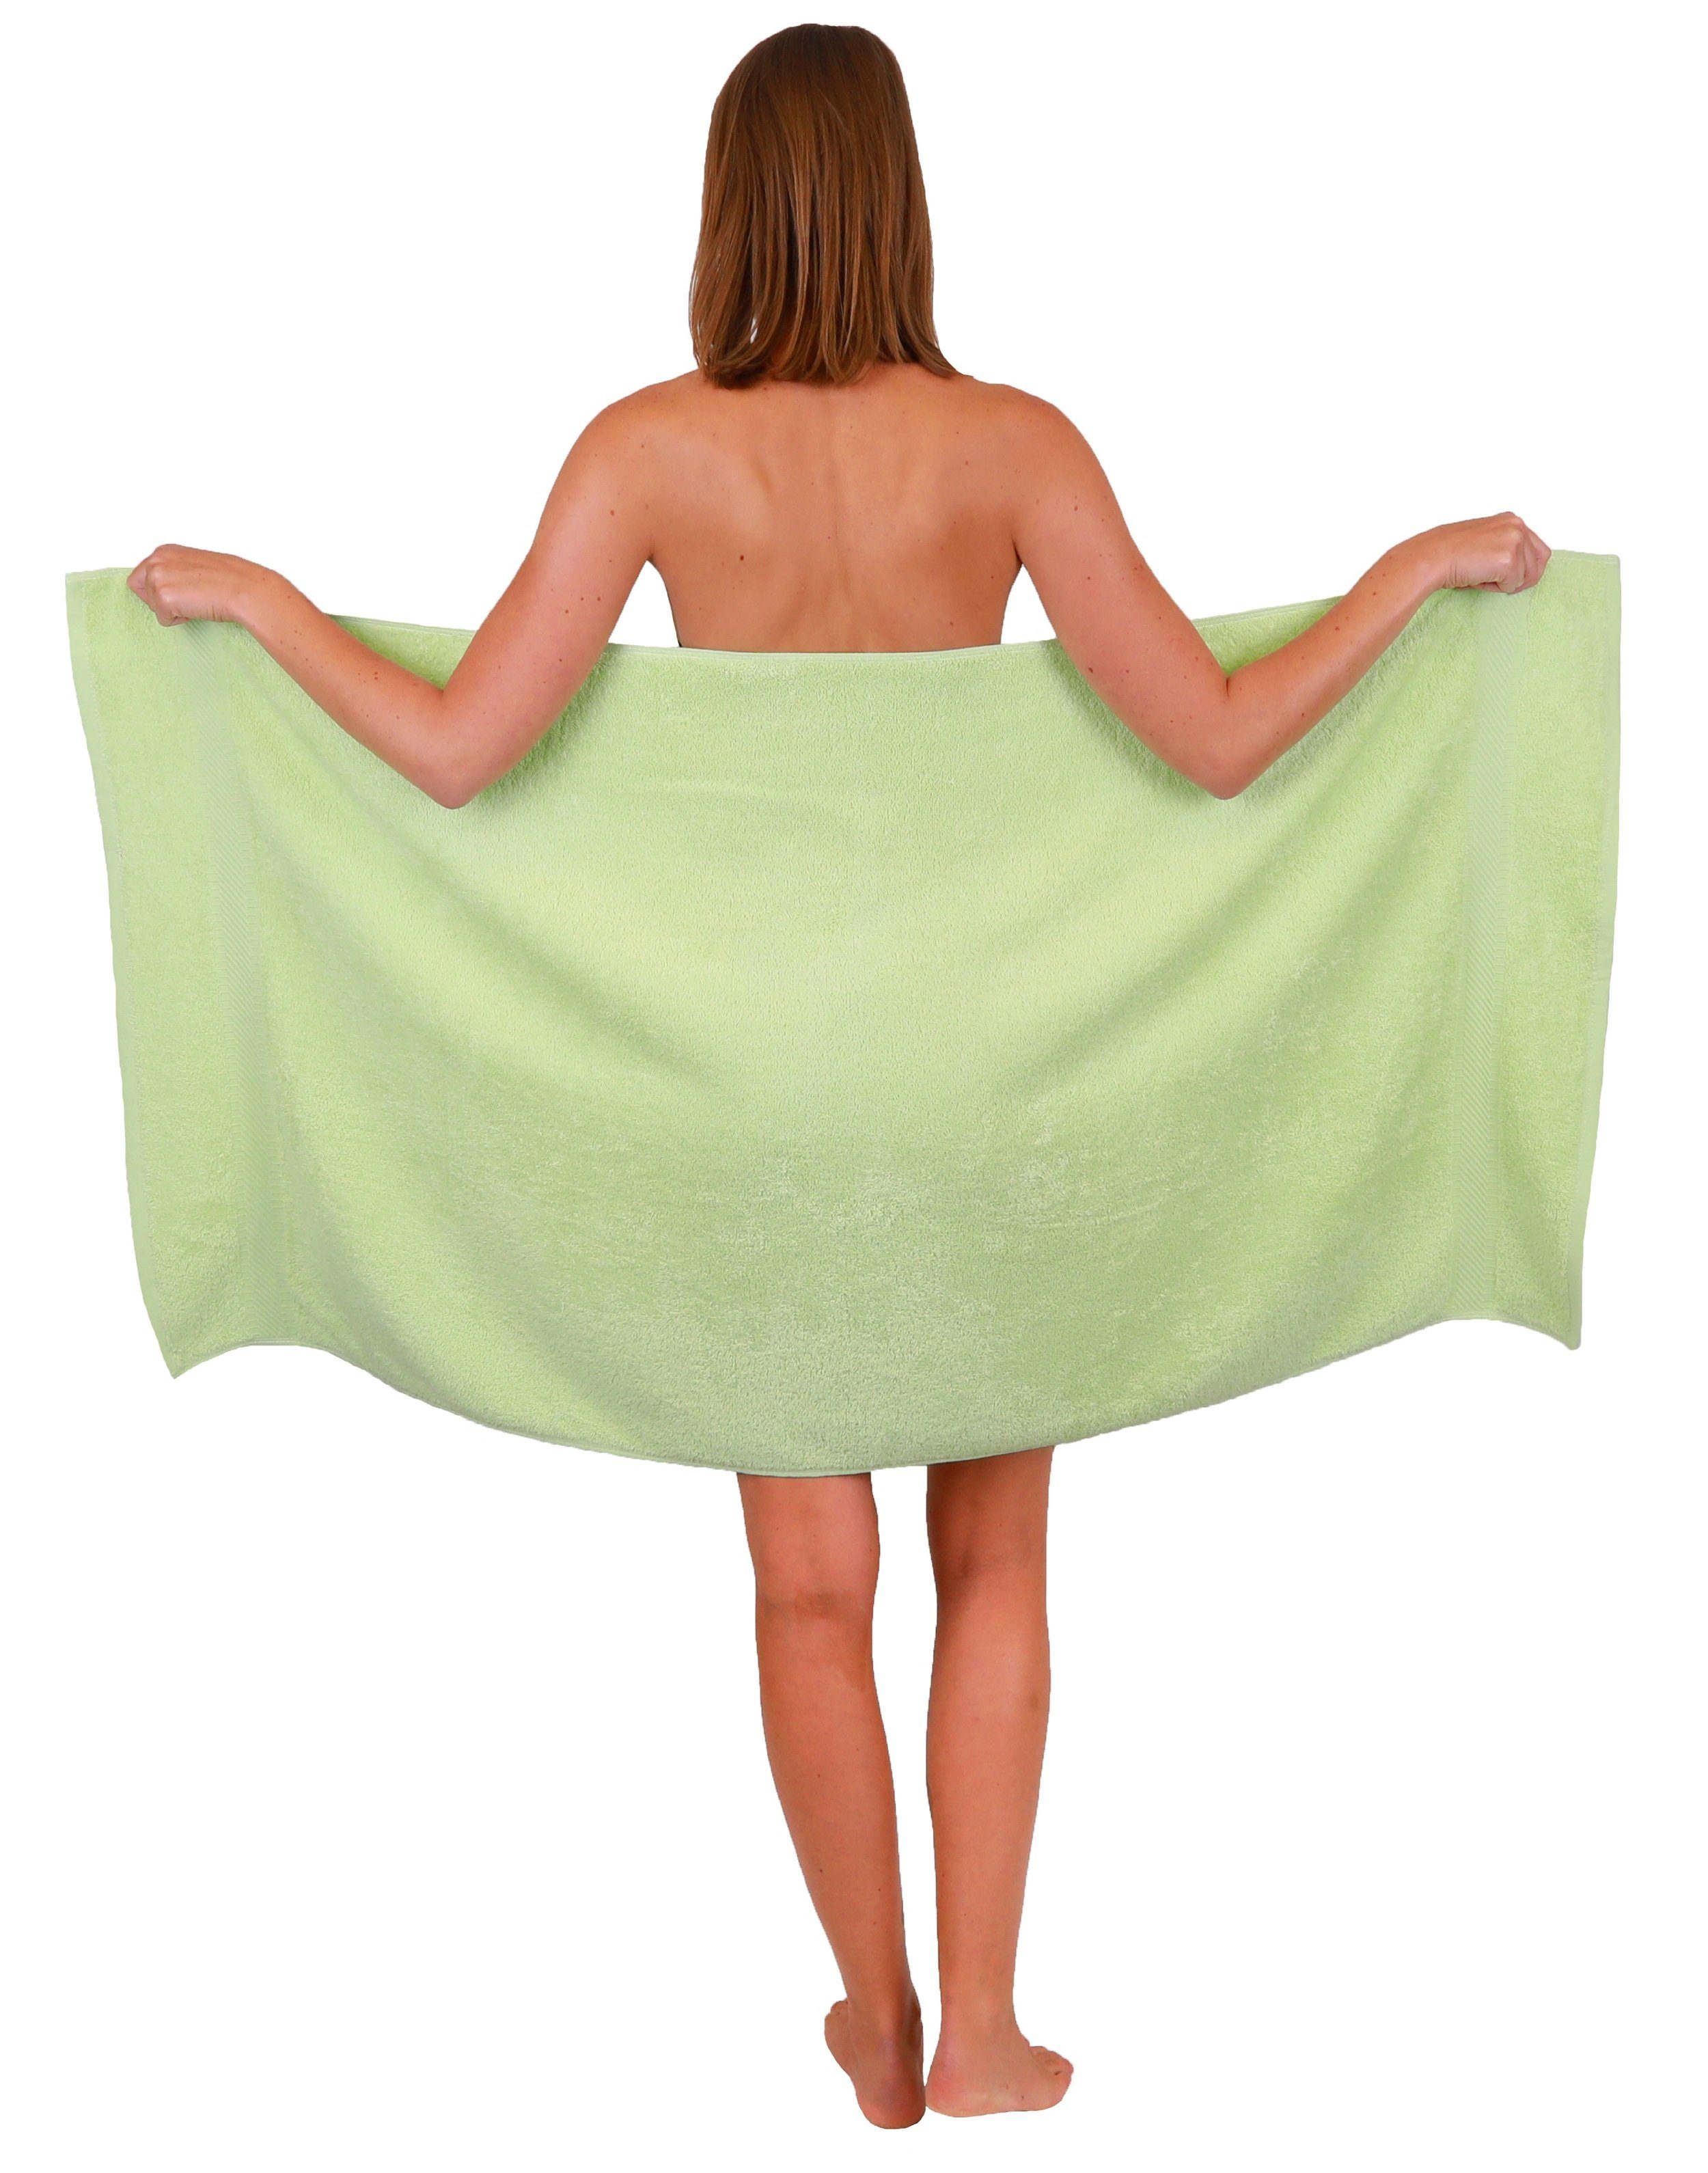 Betz 10-tlg. Handtücher anthrazit/grün, Set Duschtücher 100% 4 6 Handtuch Farbe Palermo Baumwolle Set